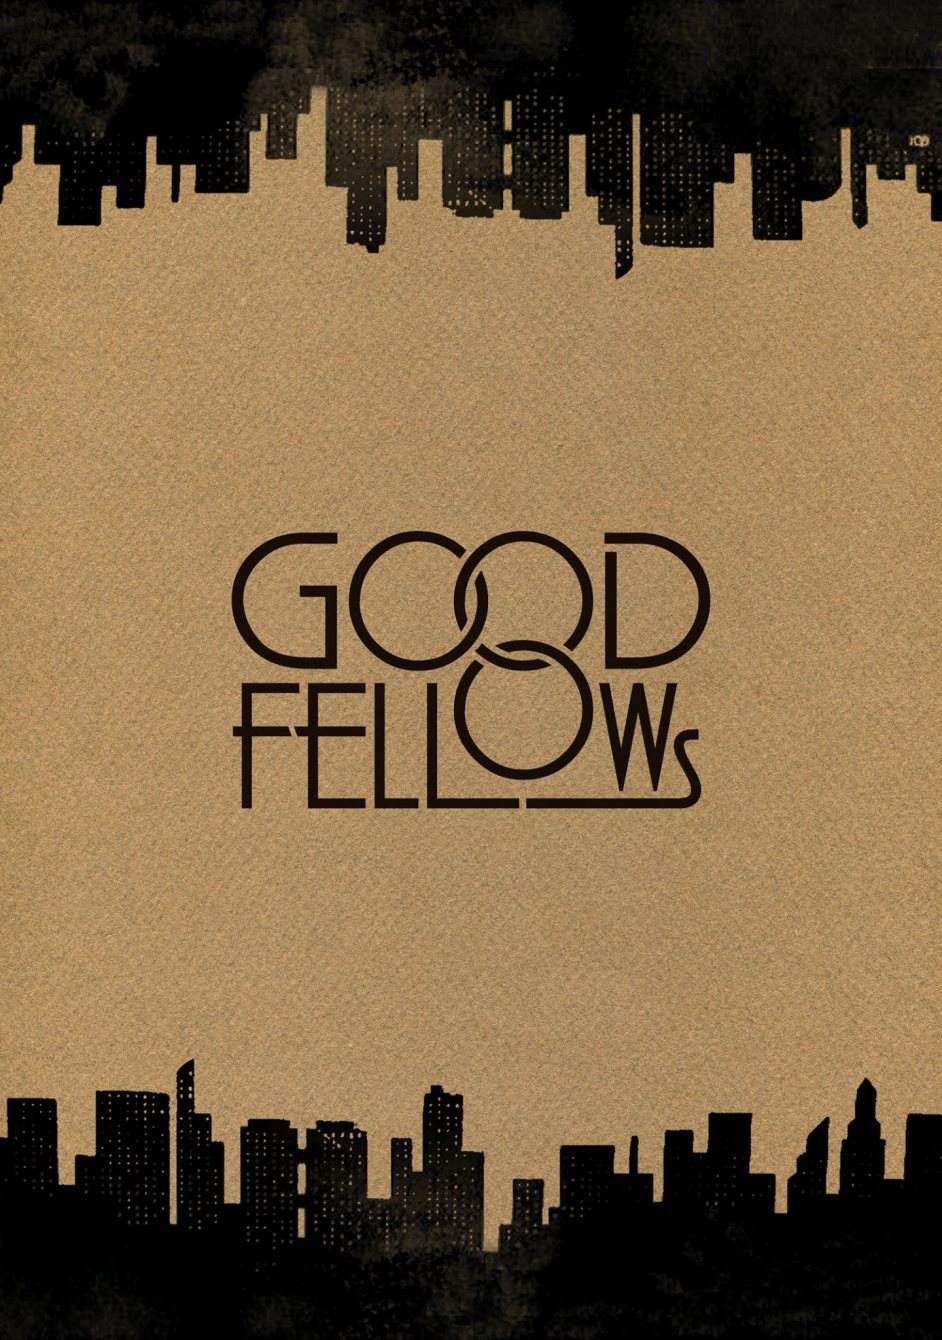 Good Fellows - フライヤー表